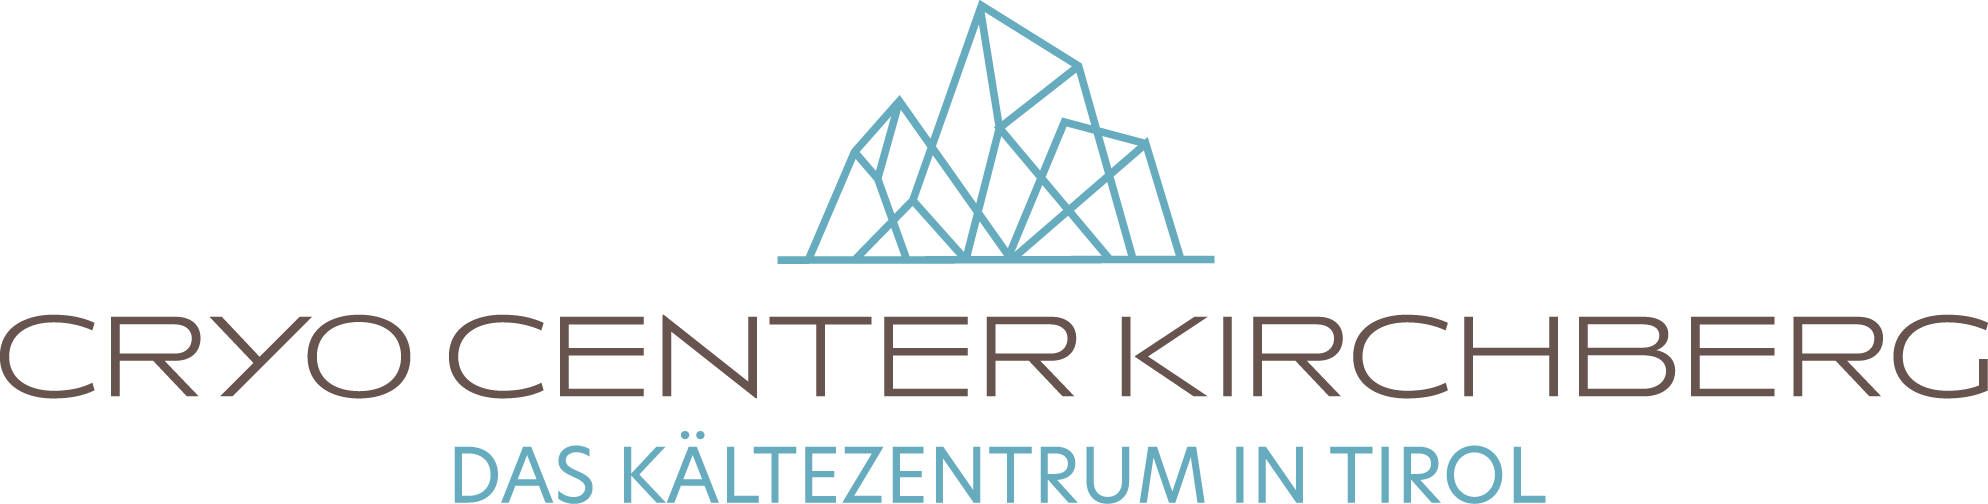 Cryo Center Kirchberg Logo